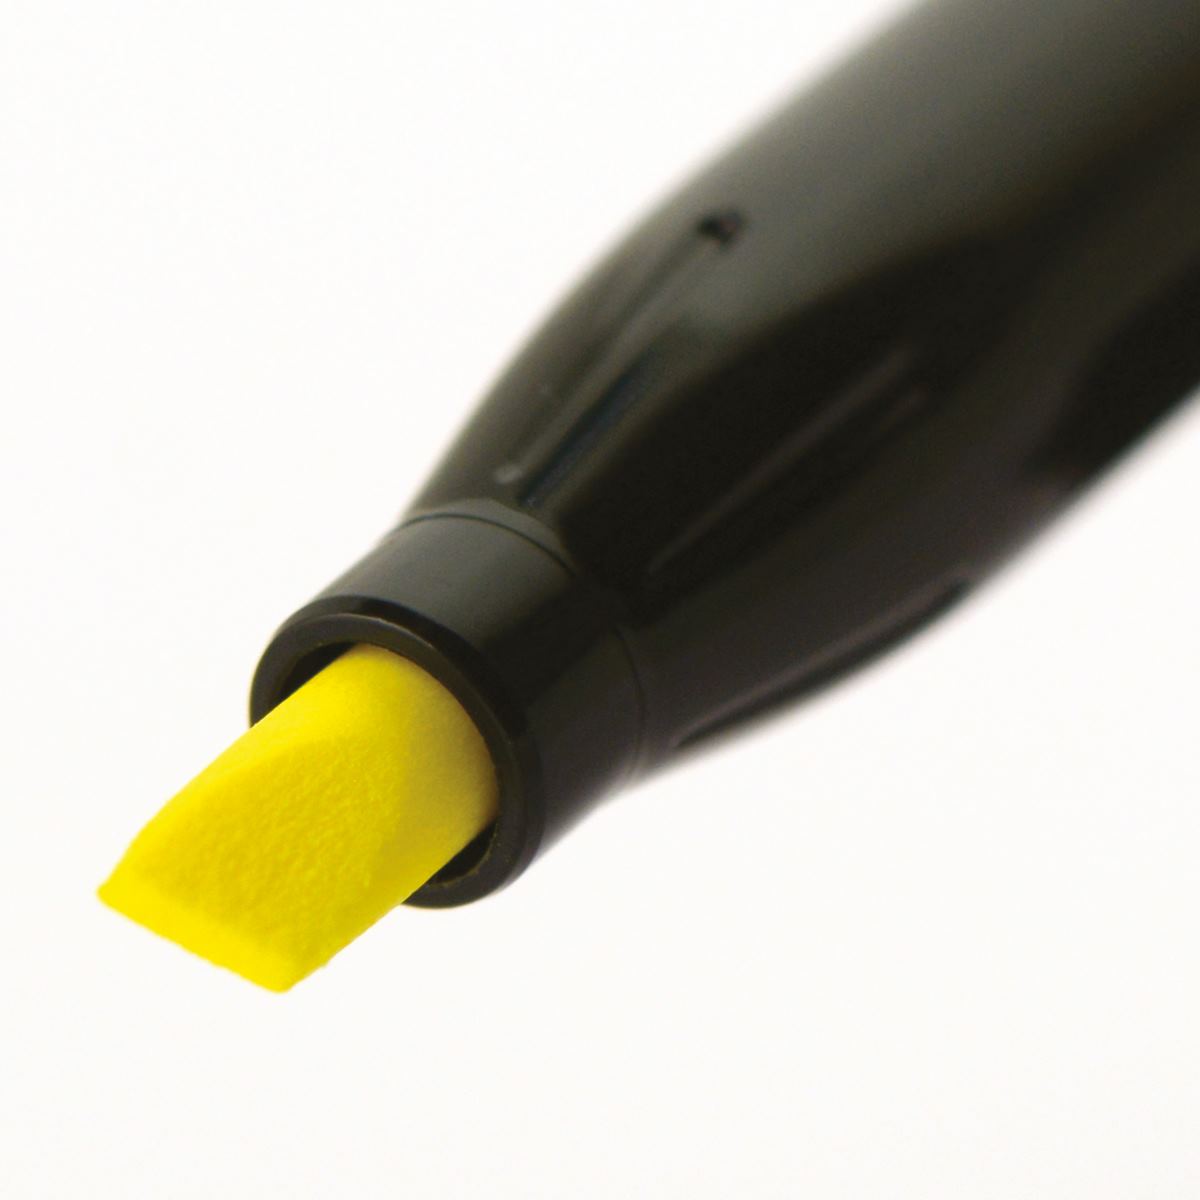 Pilot FriXion Light Erasable Highlighter - Yellow